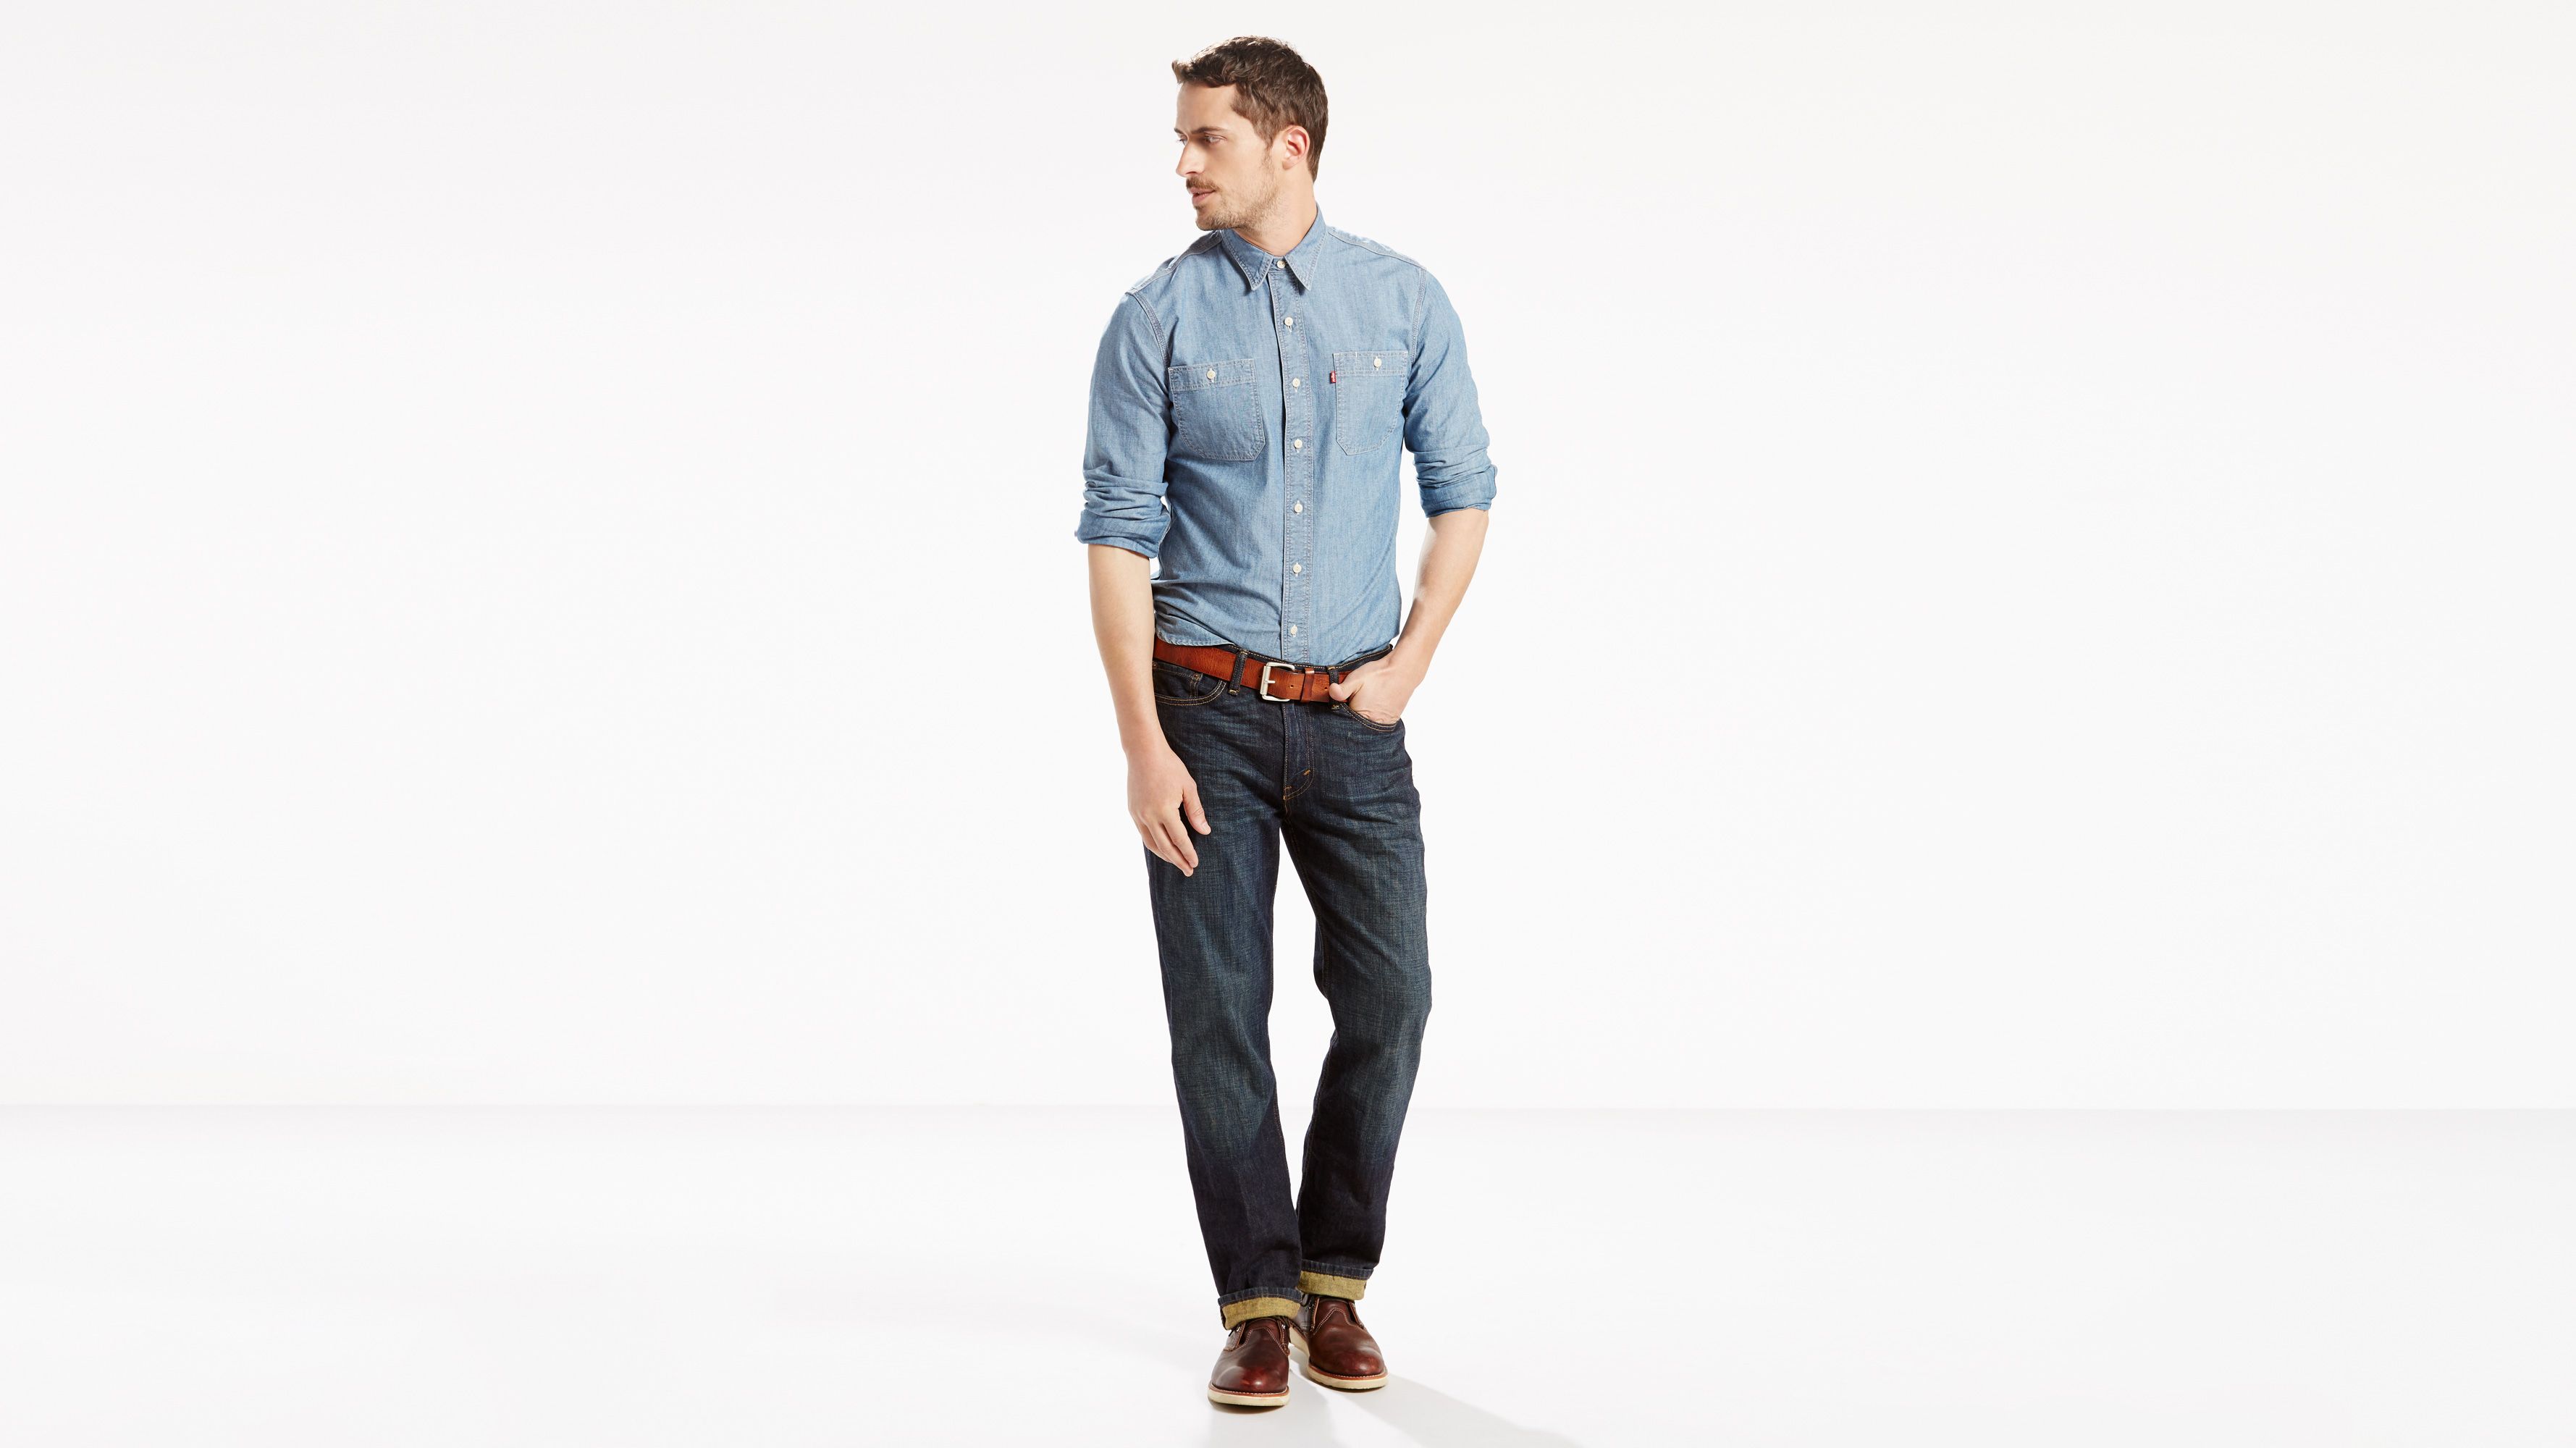 514™ Straight Fit Men's Jeans - Medium 